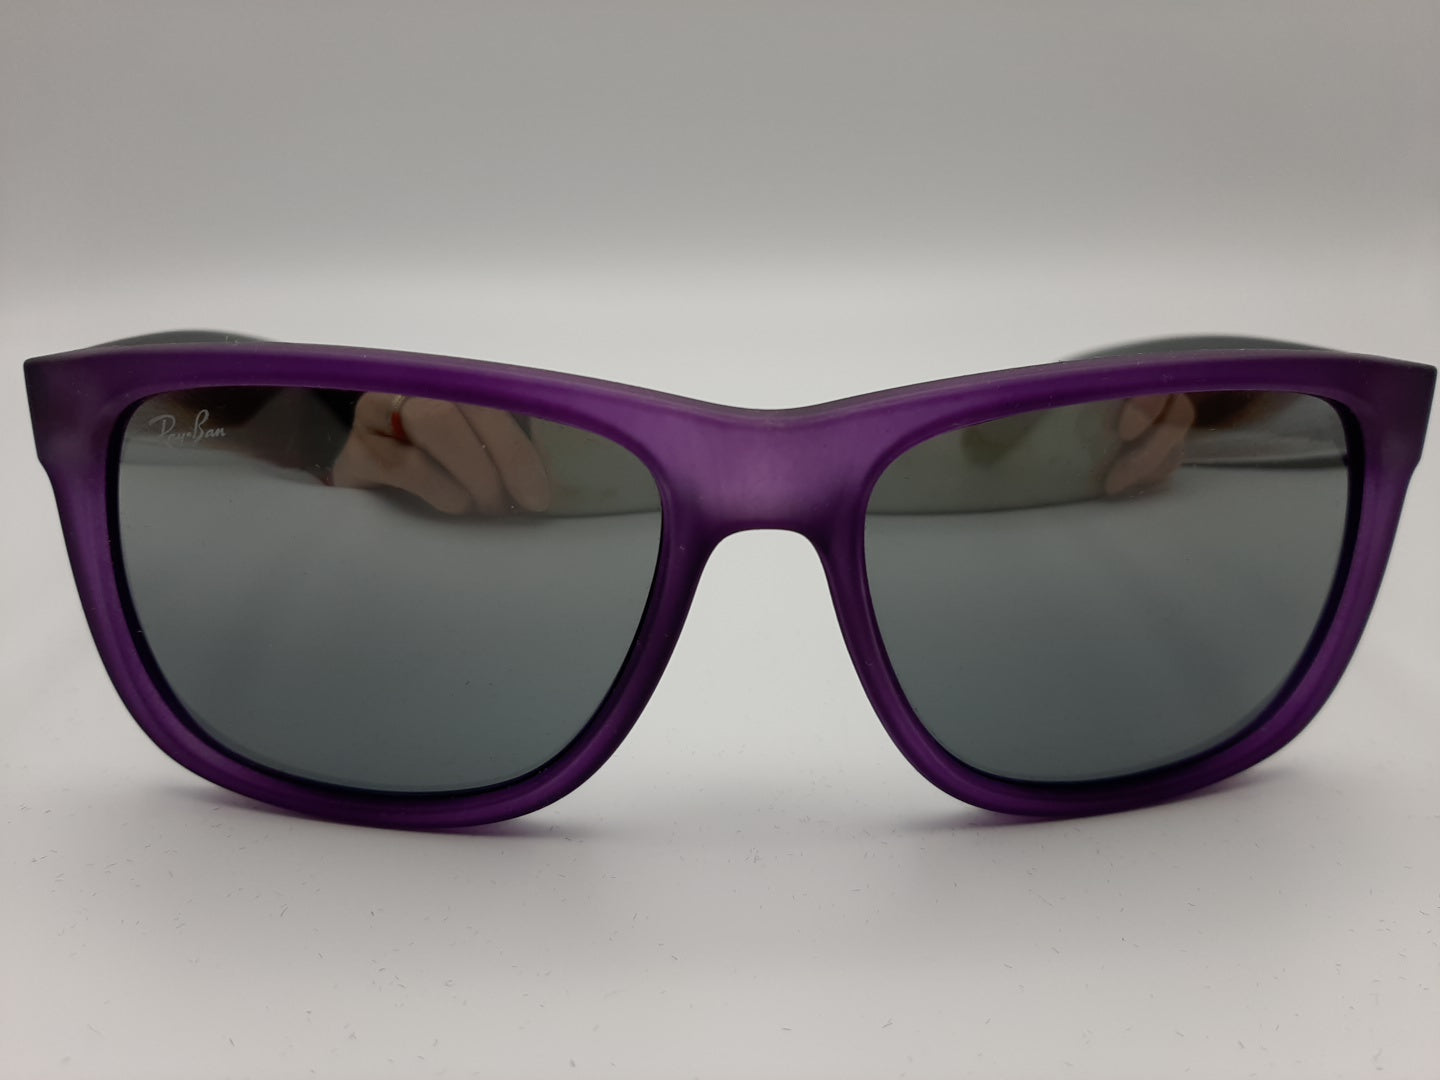 Ray Ban RB4165 Justin 6024/88 54-16 3N Purple Sunglasses - New